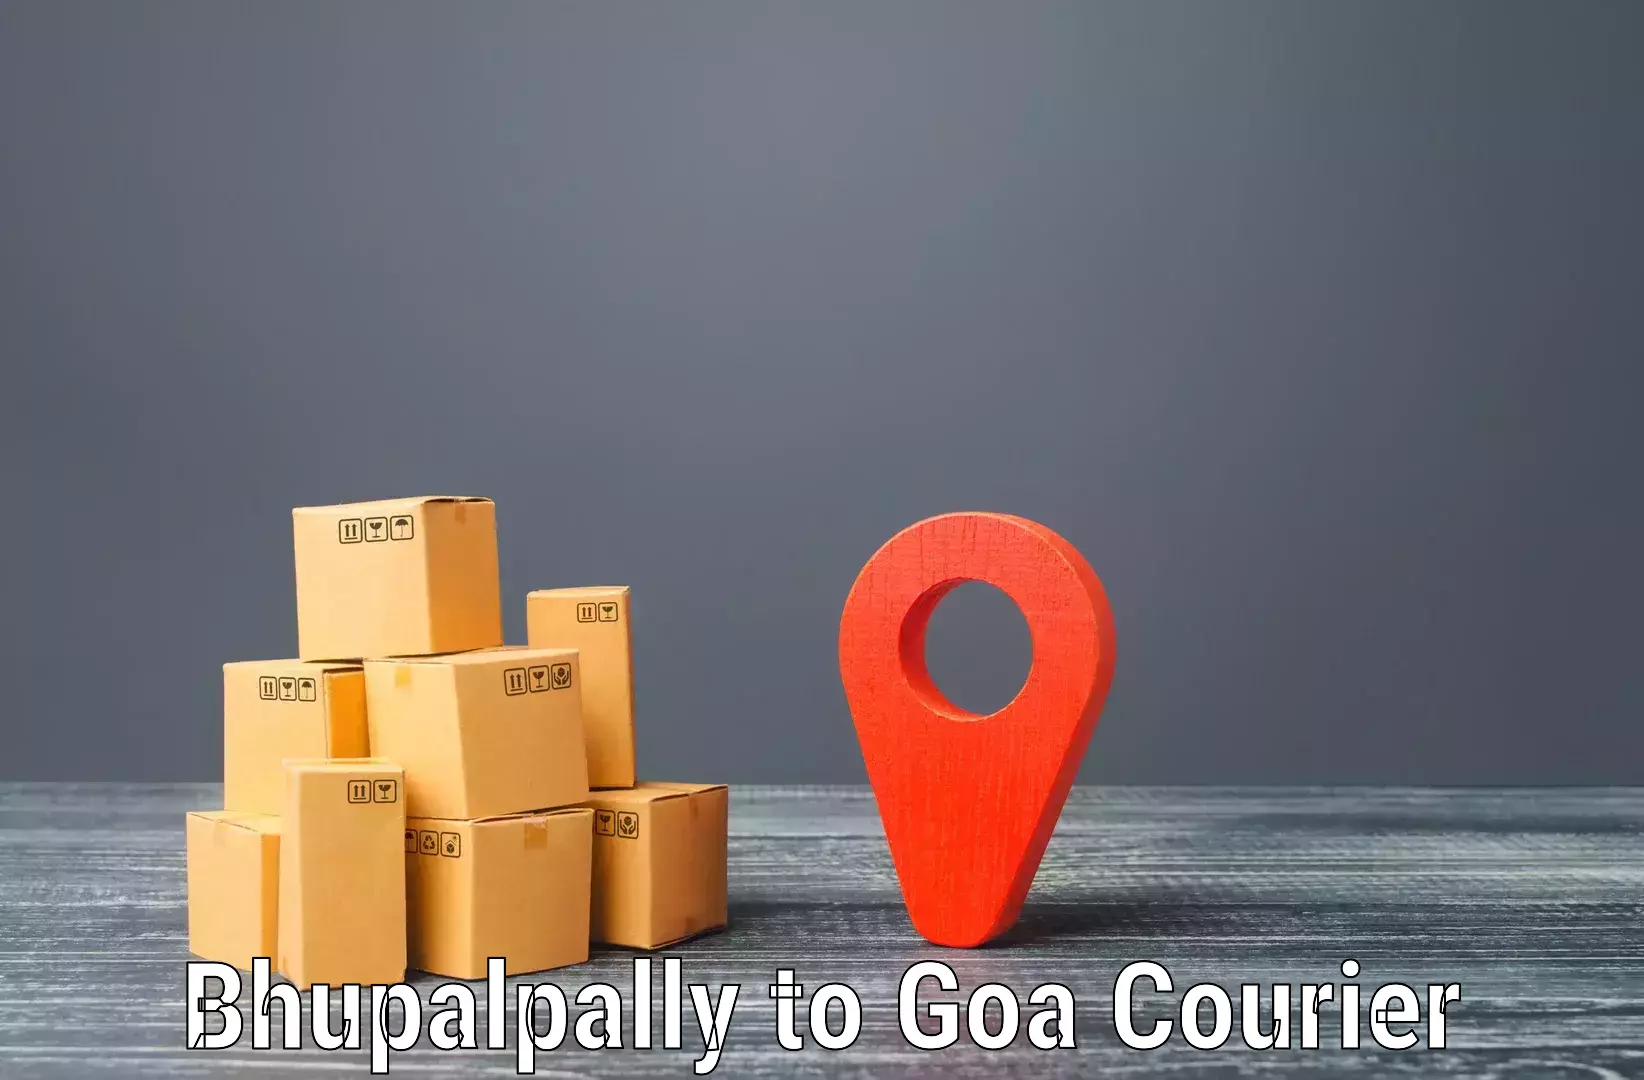 Global logistics network Bhupalpally to Vasco da Gama